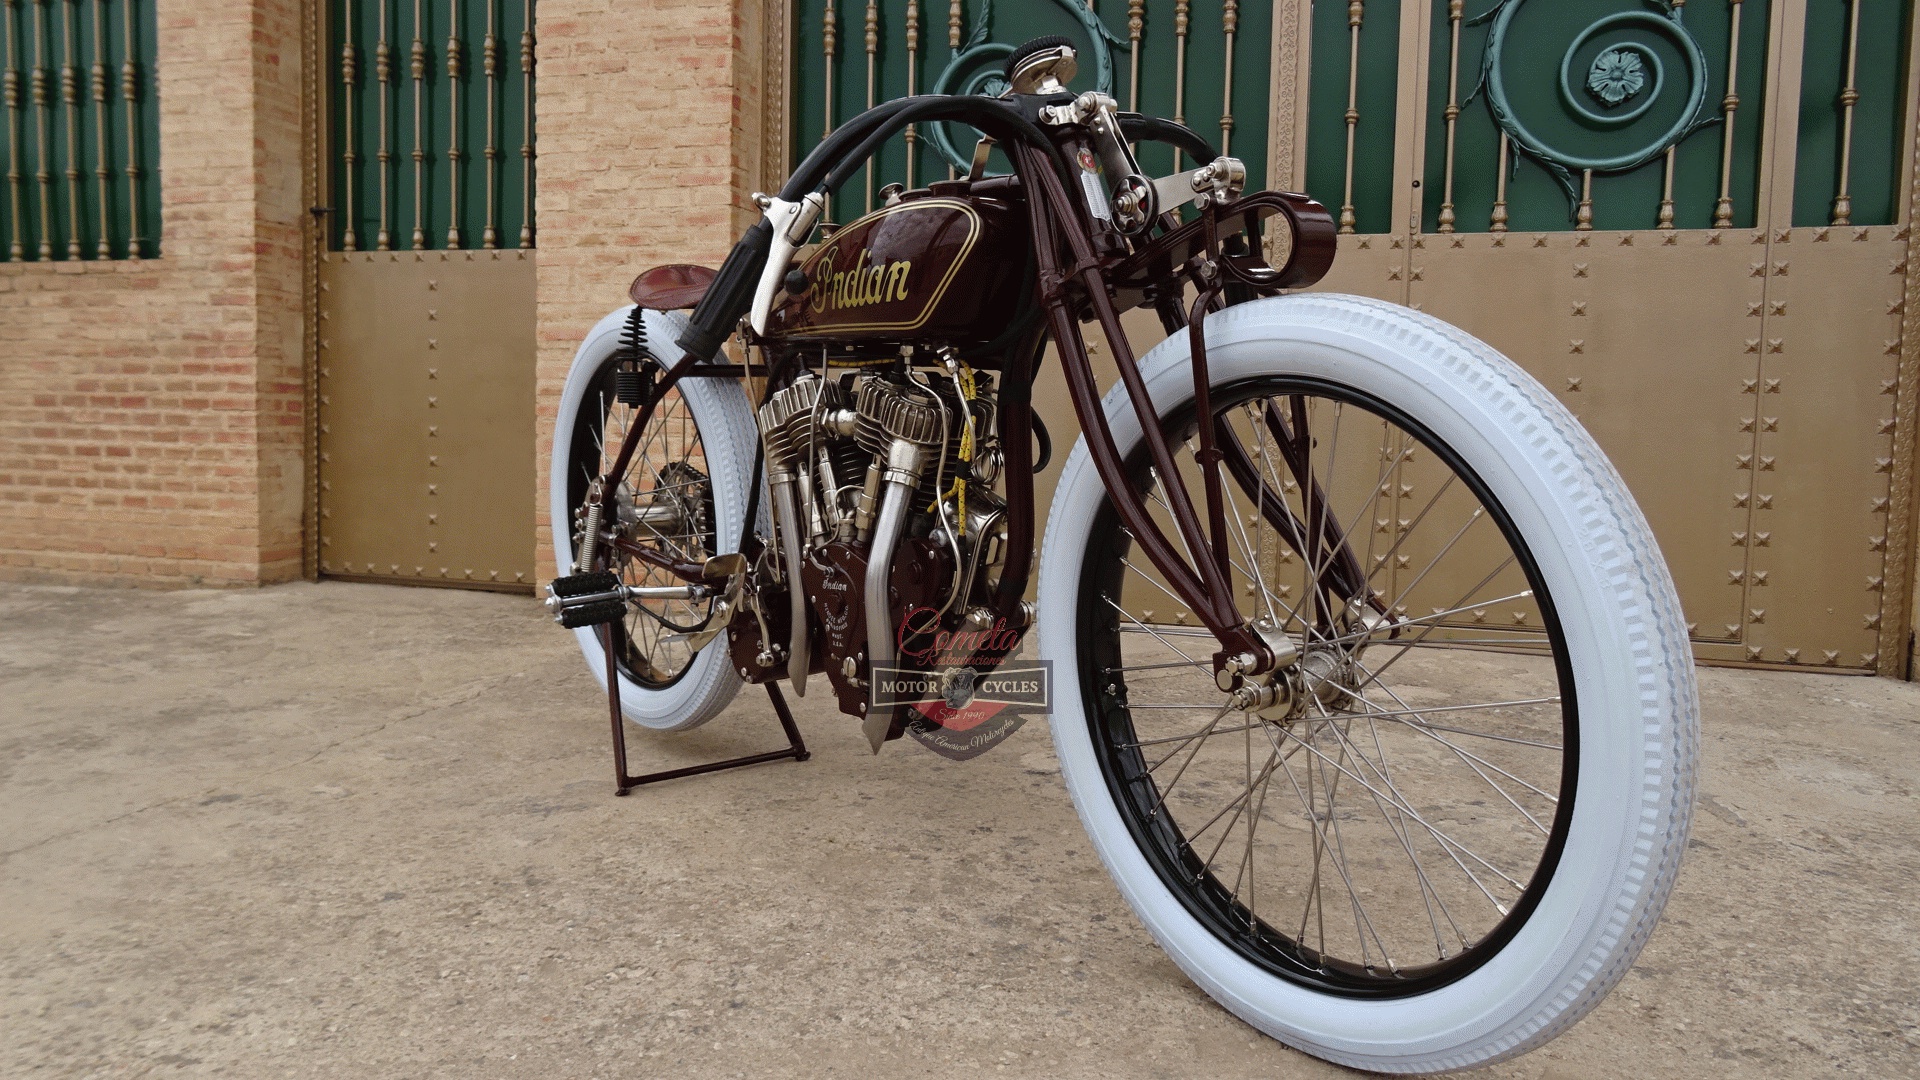 INDIAN POWERPLUS TT RACER AÑO 1920 1000cc